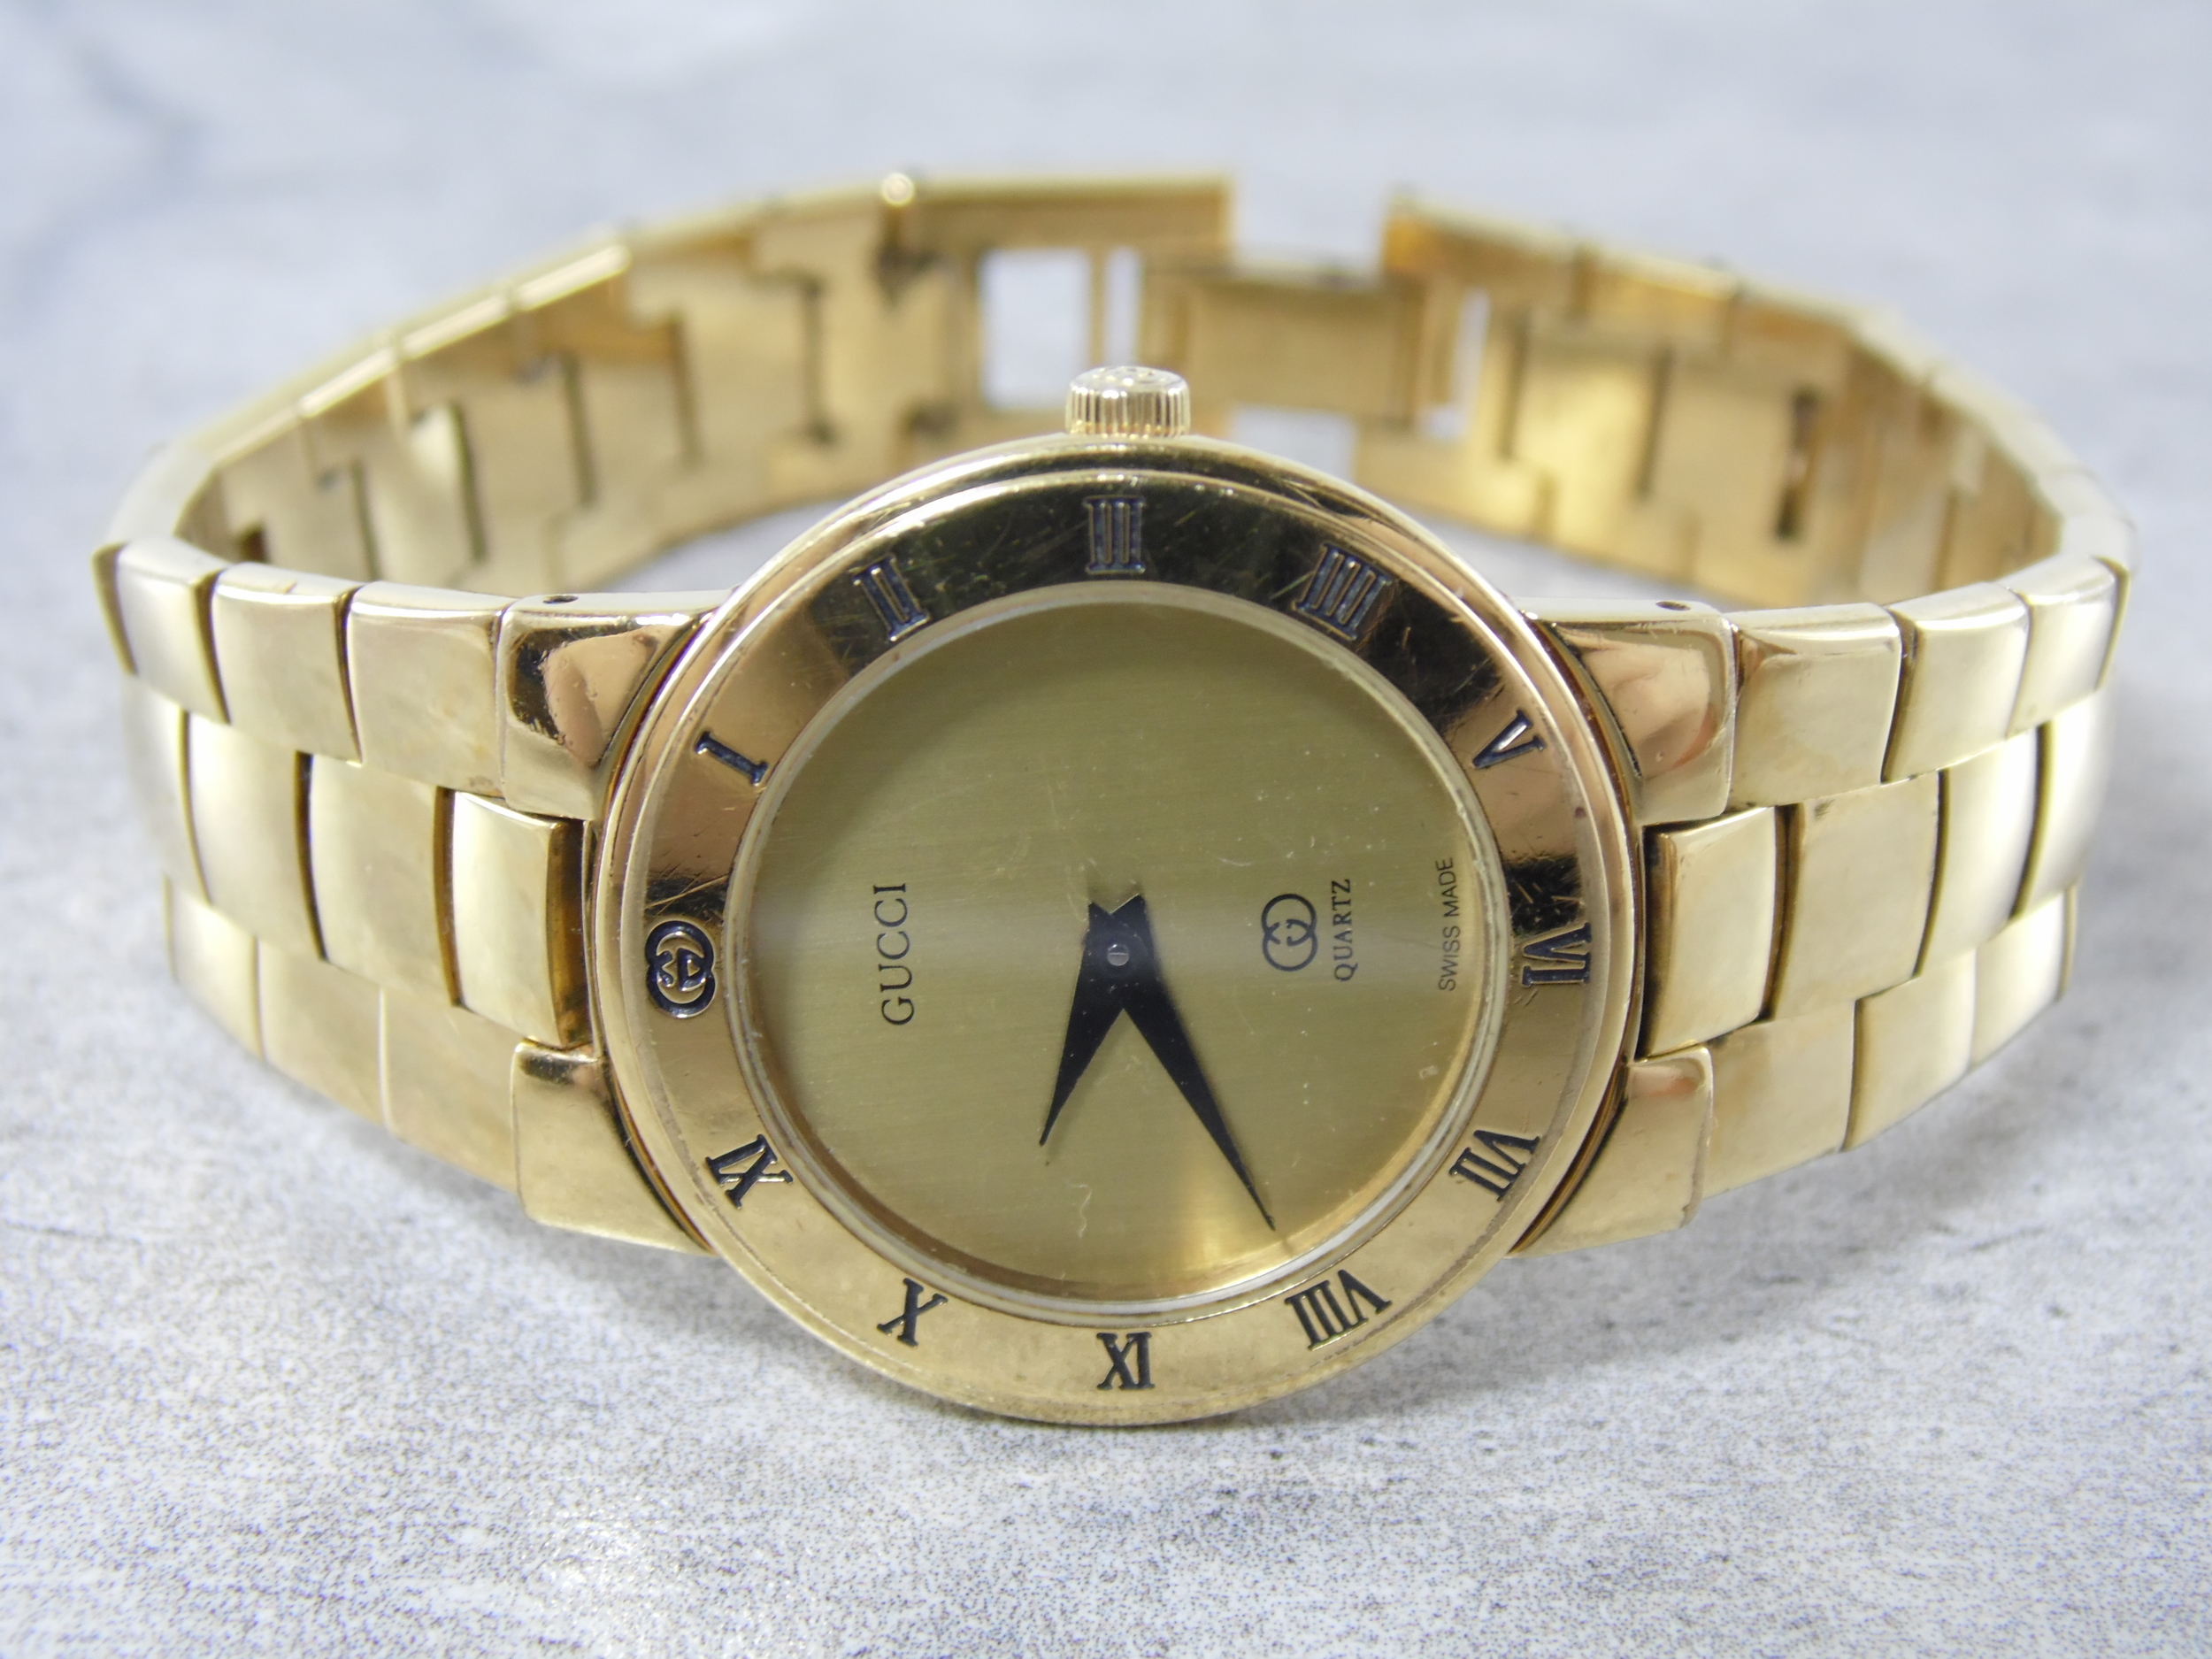 gucci vintage gold watch